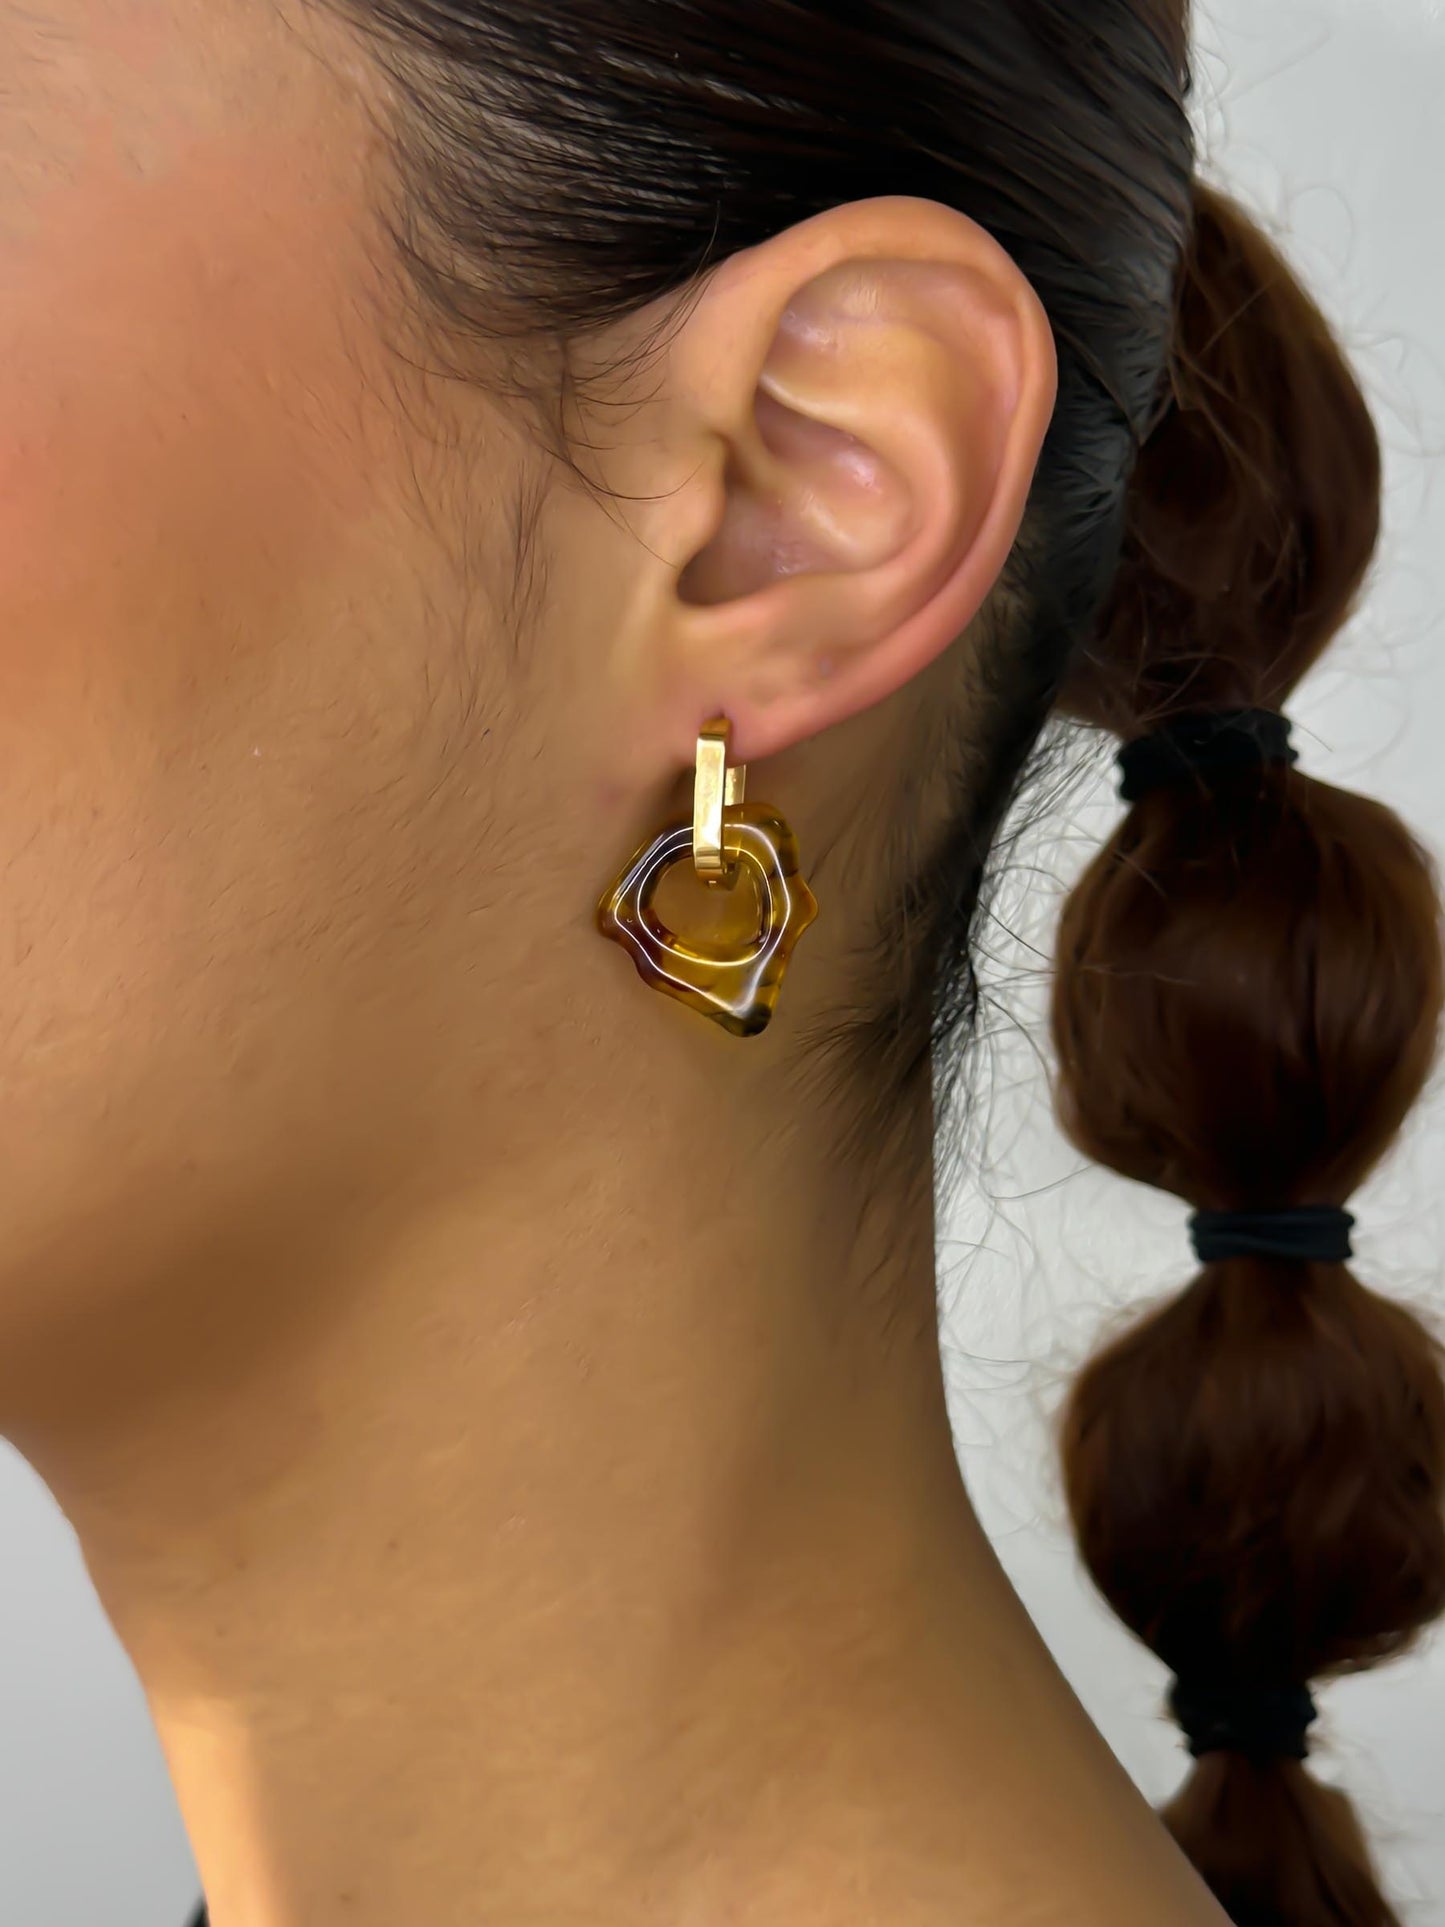 Ora transparent gold earring 2 (pair)